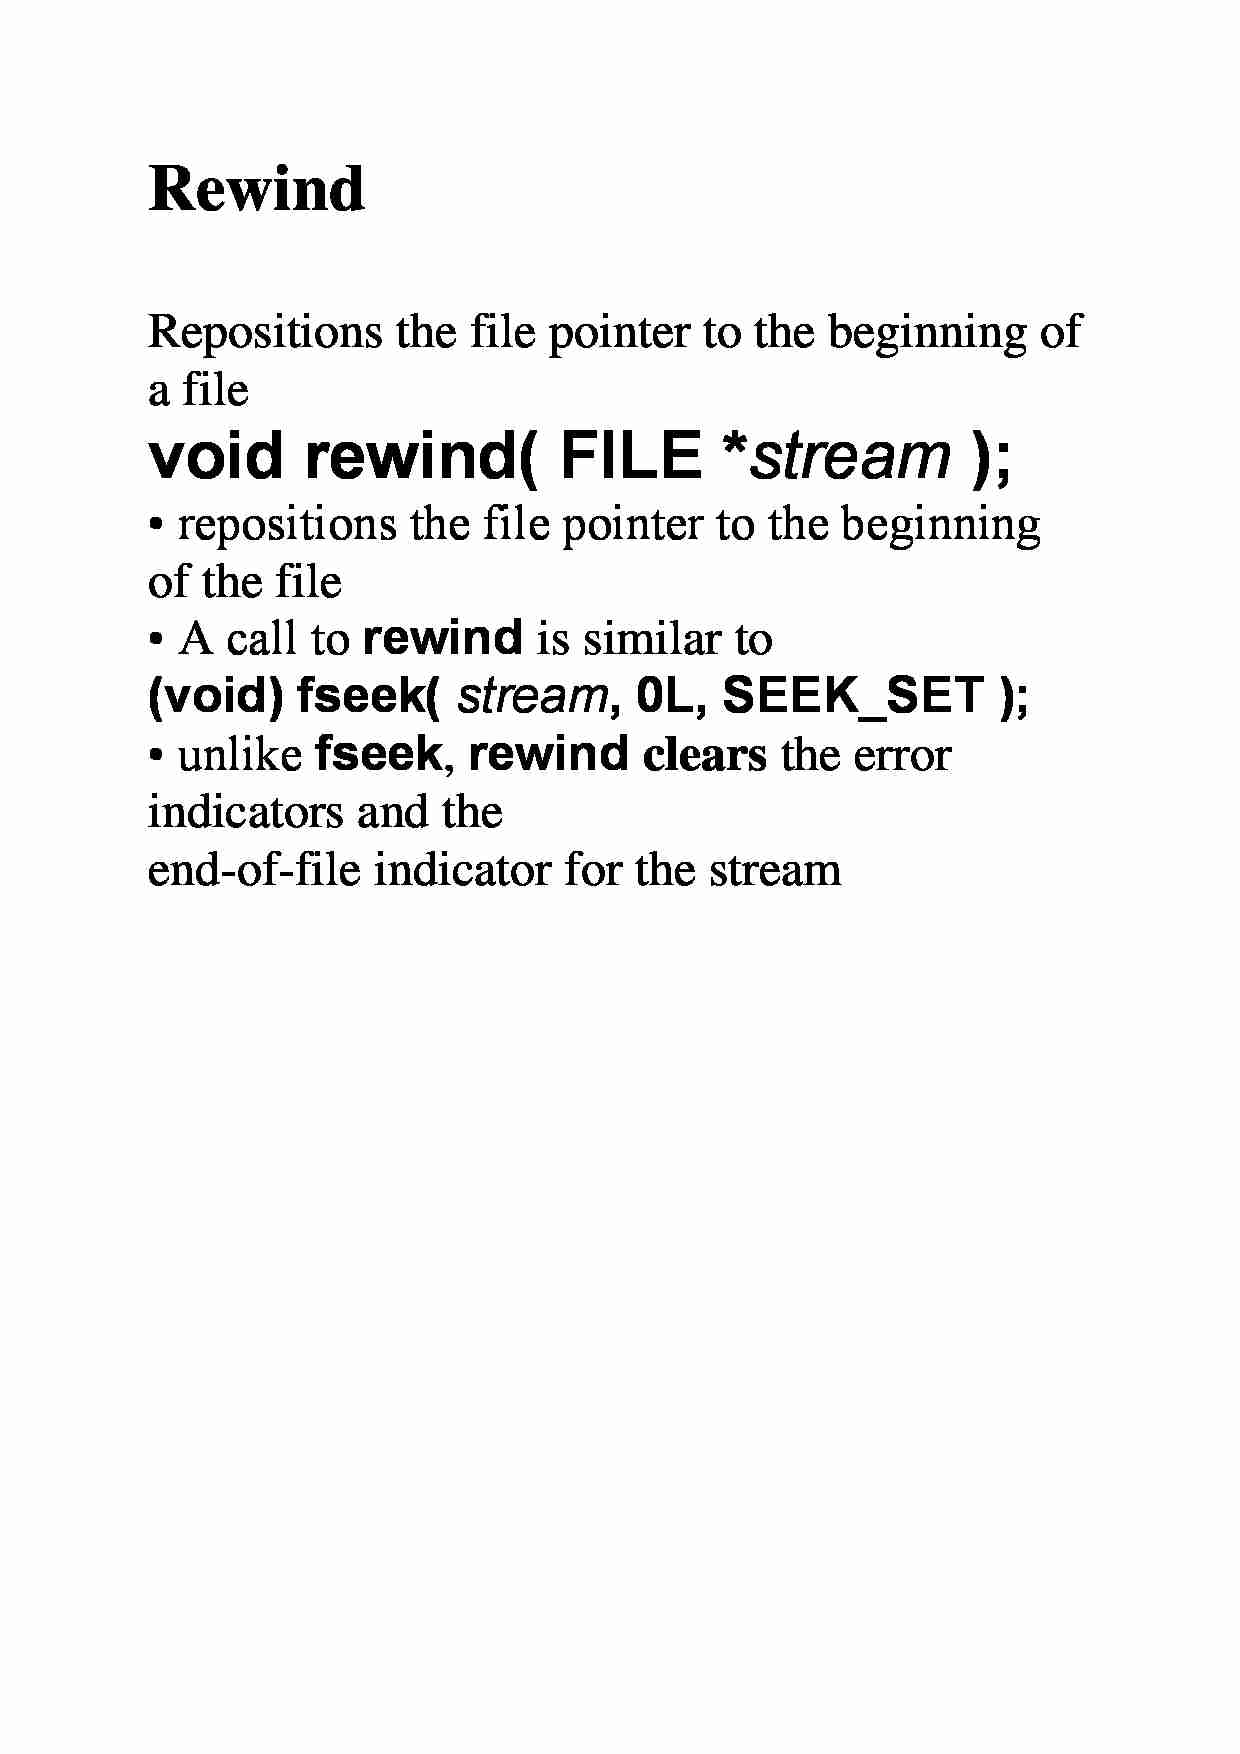 Rewind  - overview - strona 1